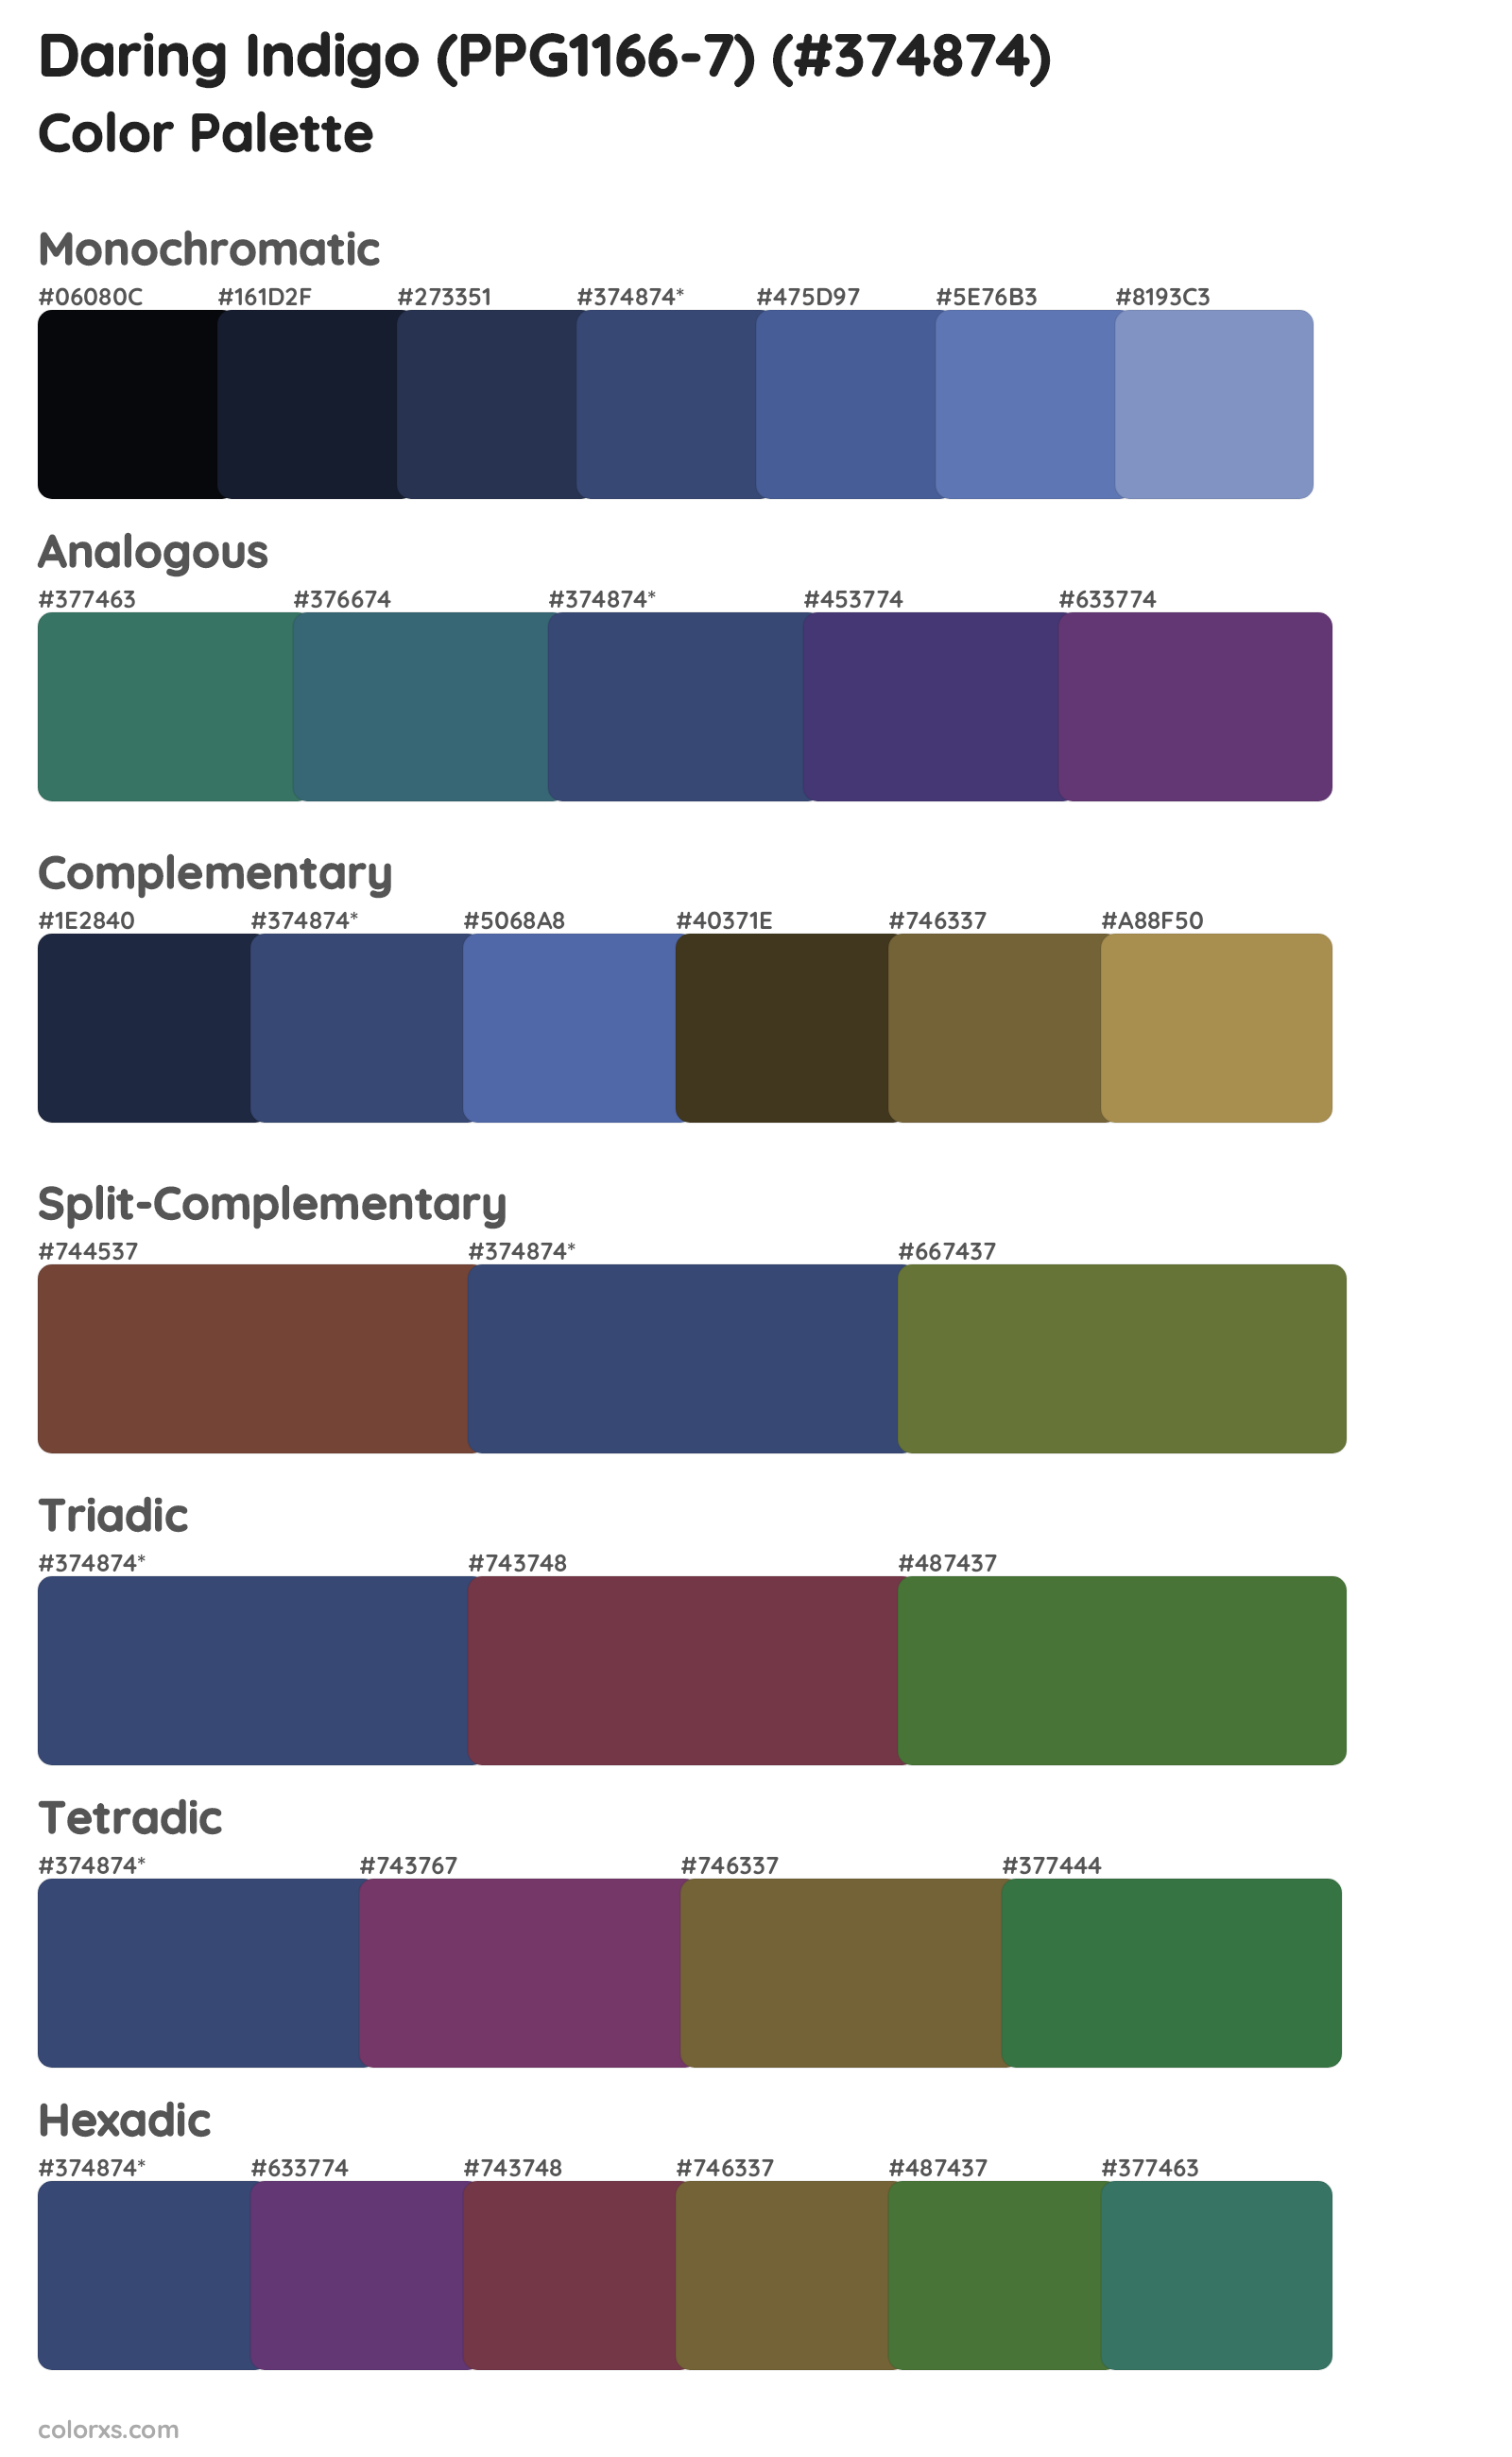 Daring Indigo (PPG1166-7) Color Scheme Palettes